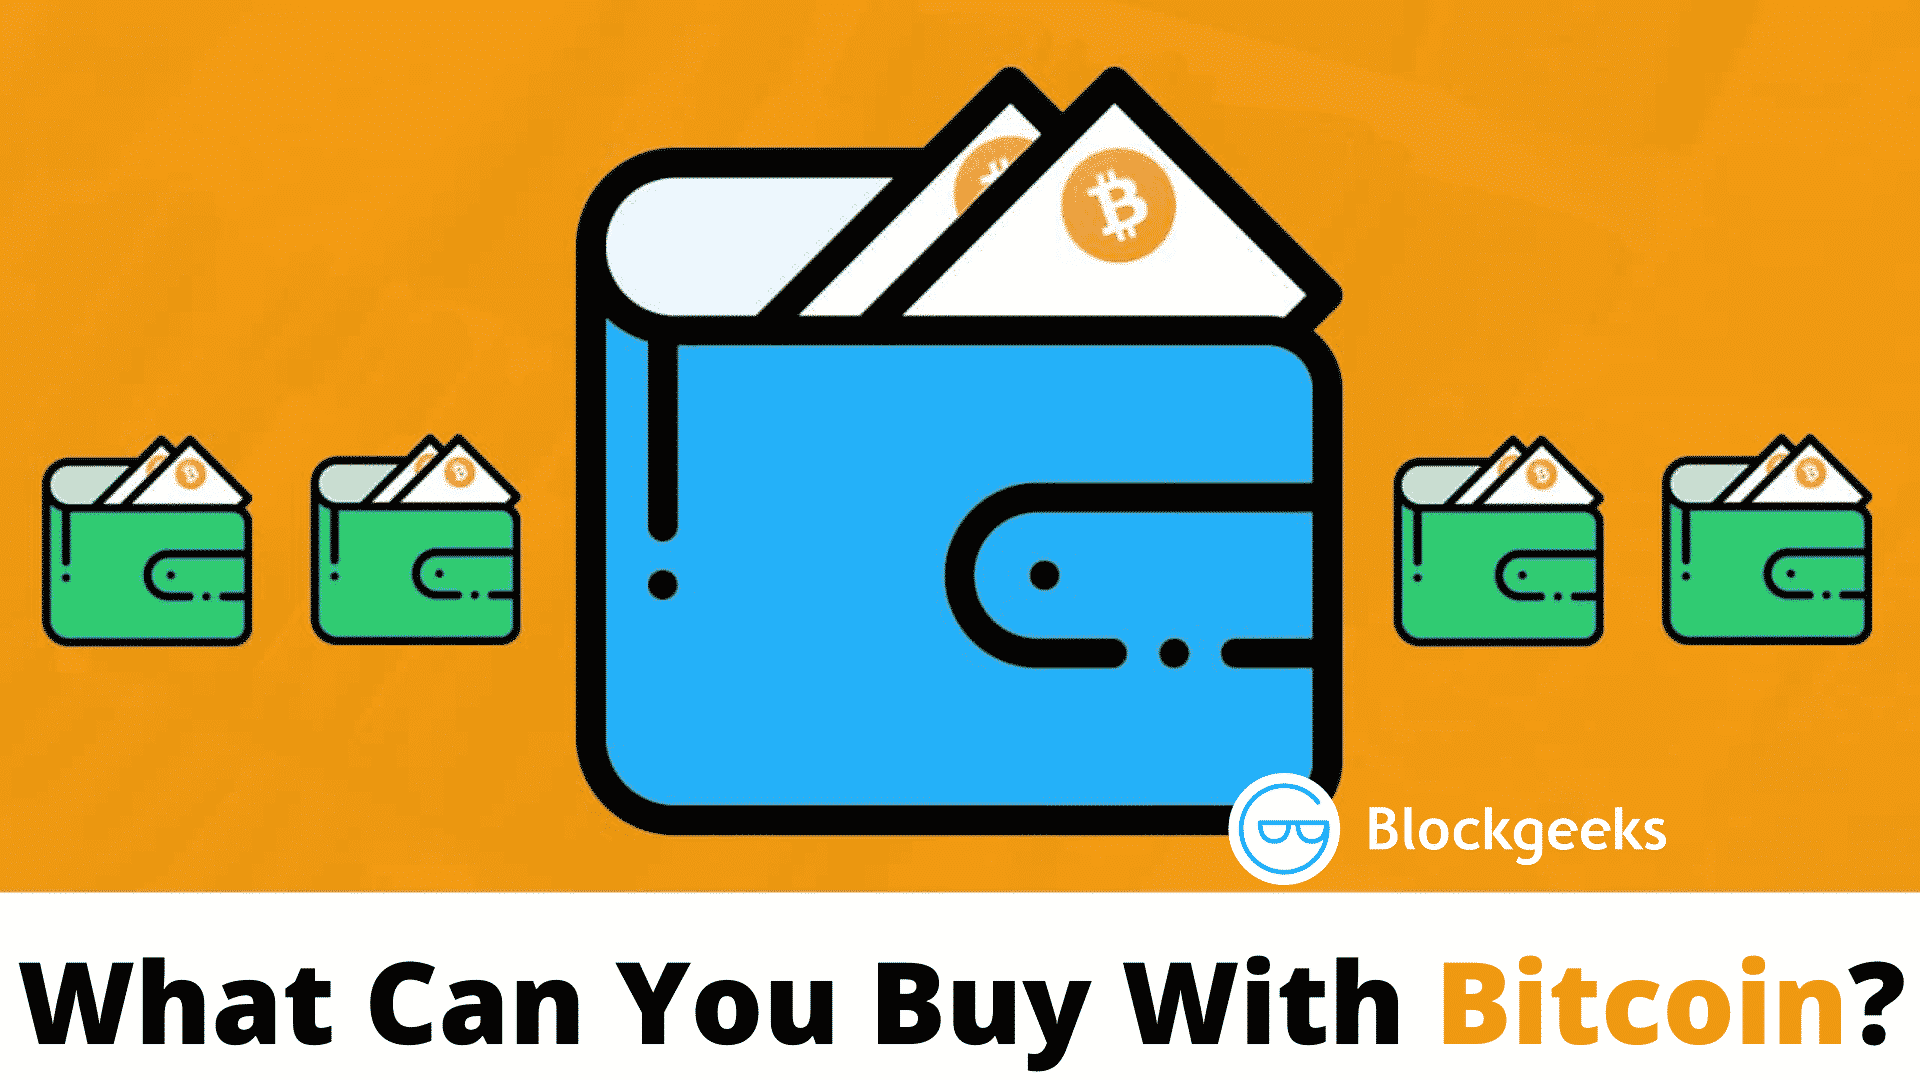 bitcoin can buy